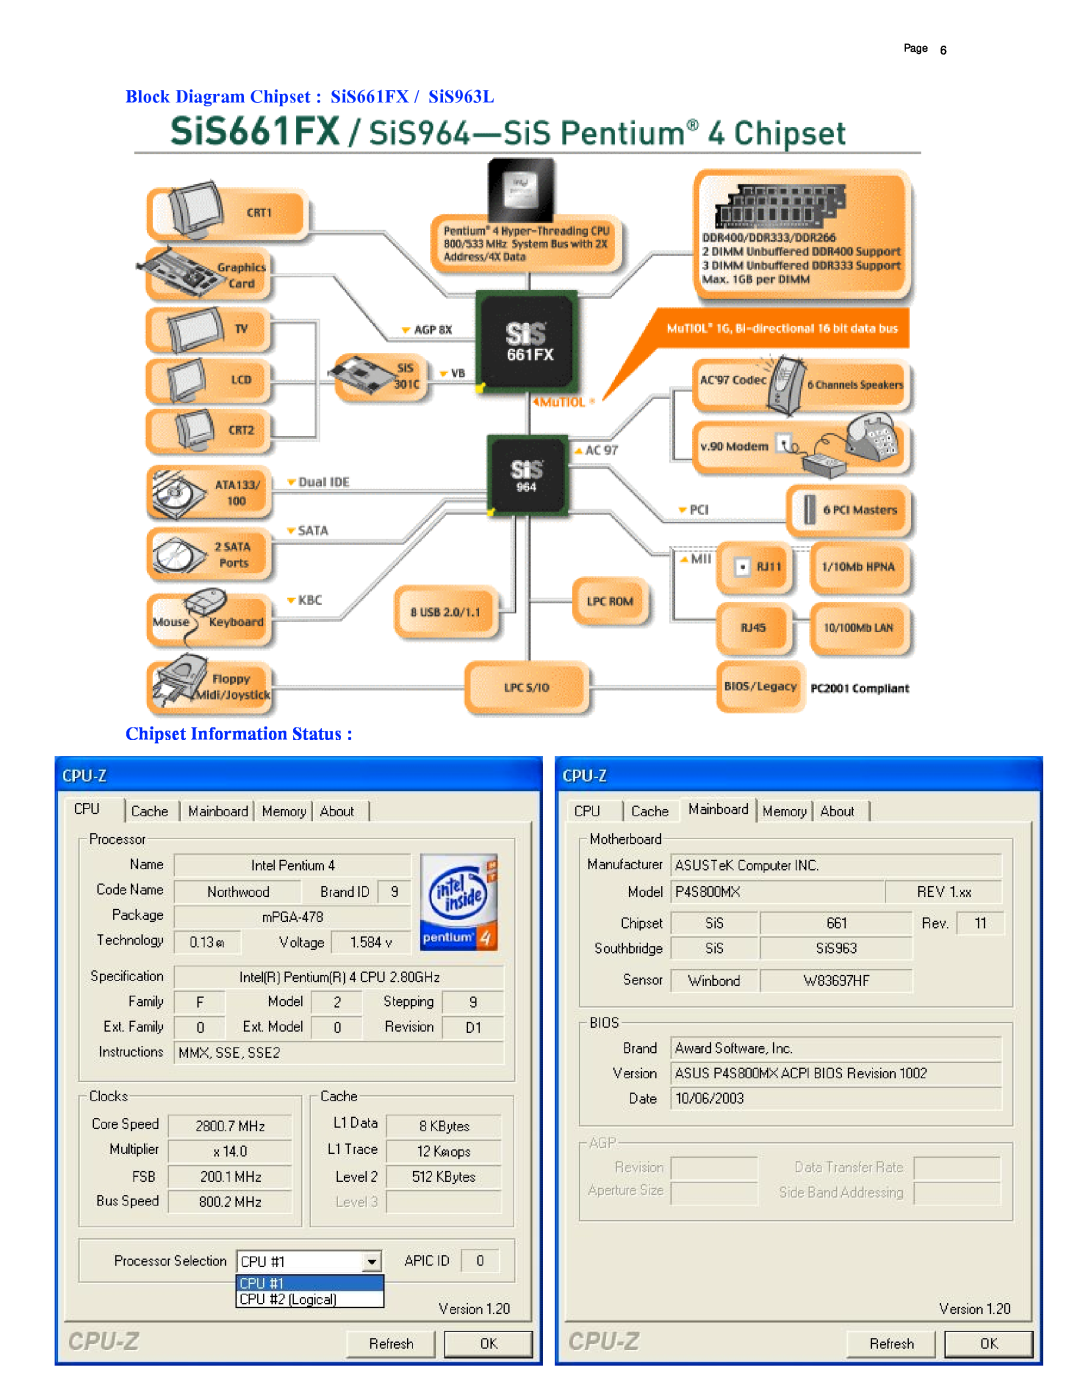 Asus P4S800-MX manual Block Diagram Chipset SiS661FX / SiS963L Chipset Information Status, Page 